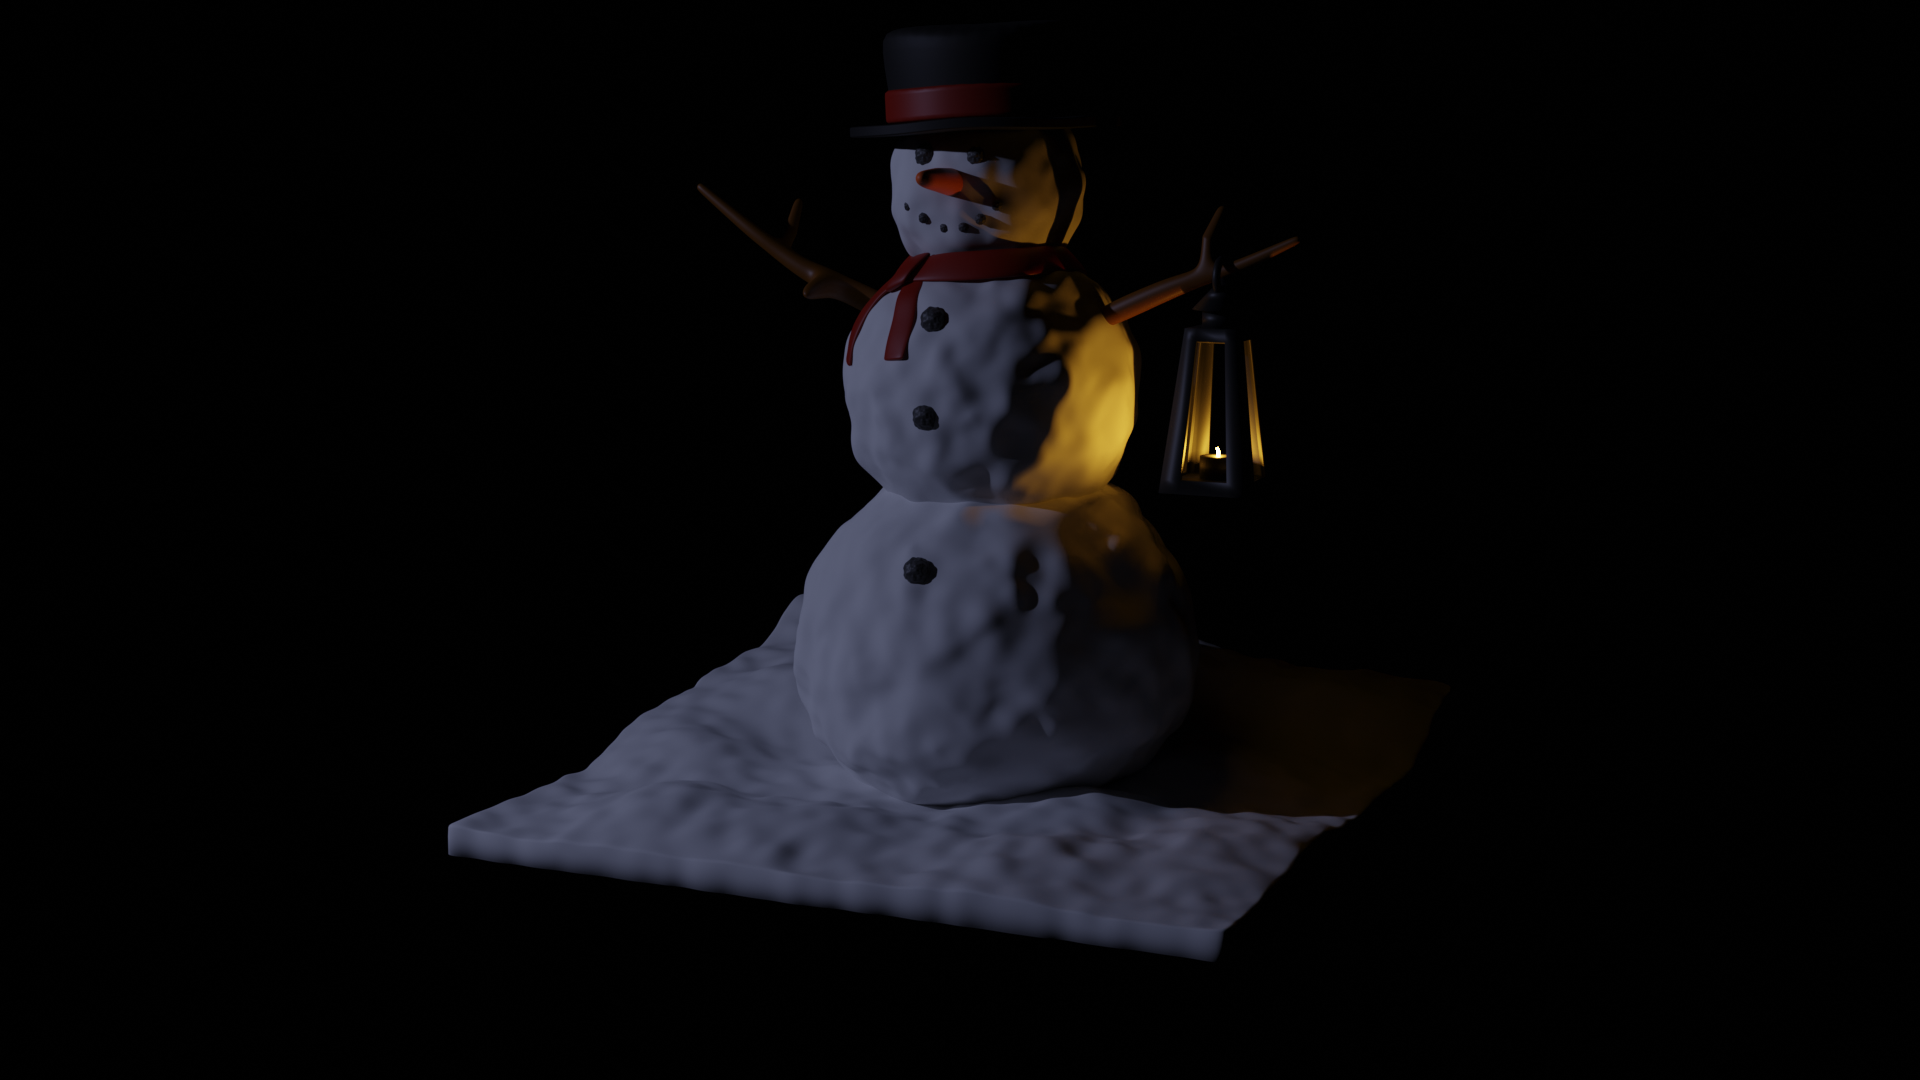 Snowman with a lantern